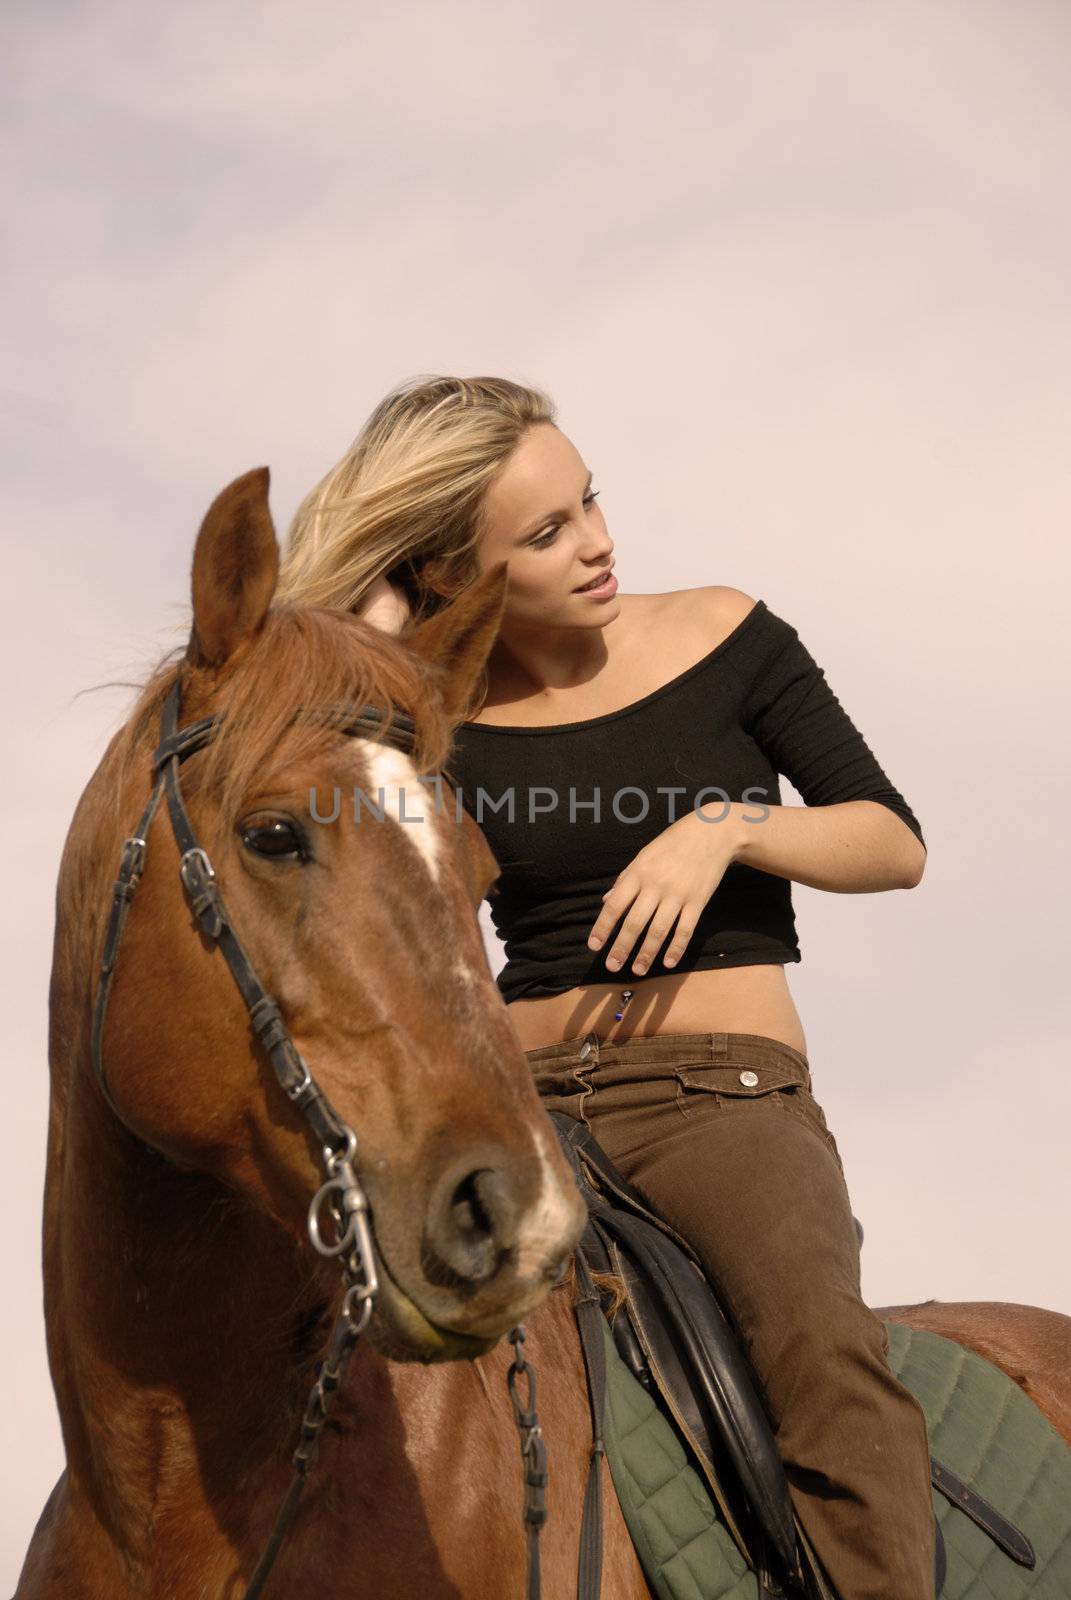 blond riding girl by cynoclub